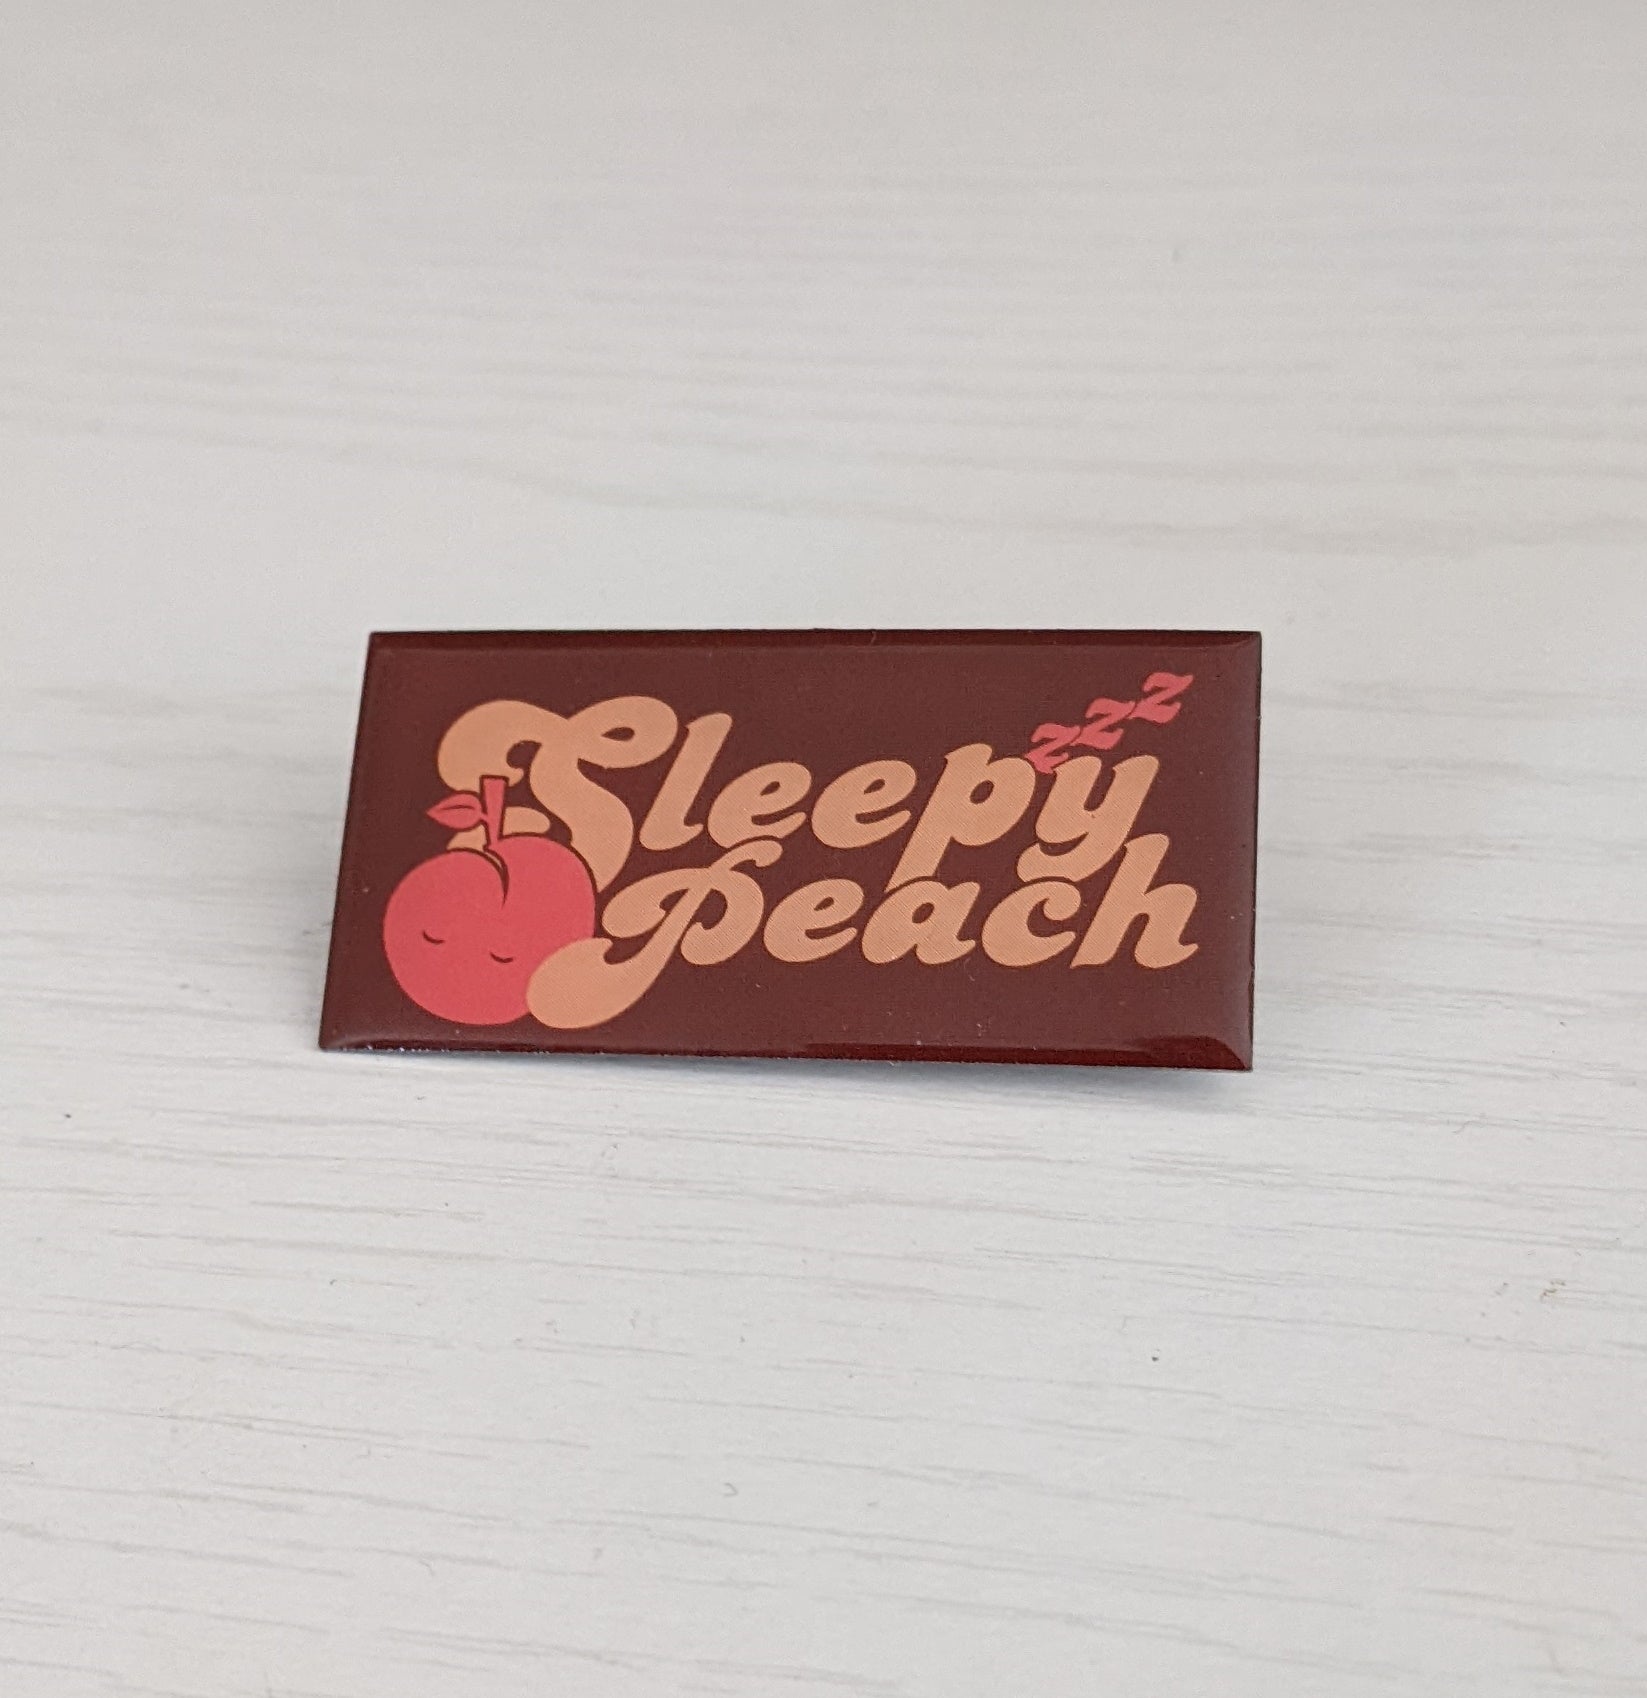 Sleepy Peach logo enamel pin.